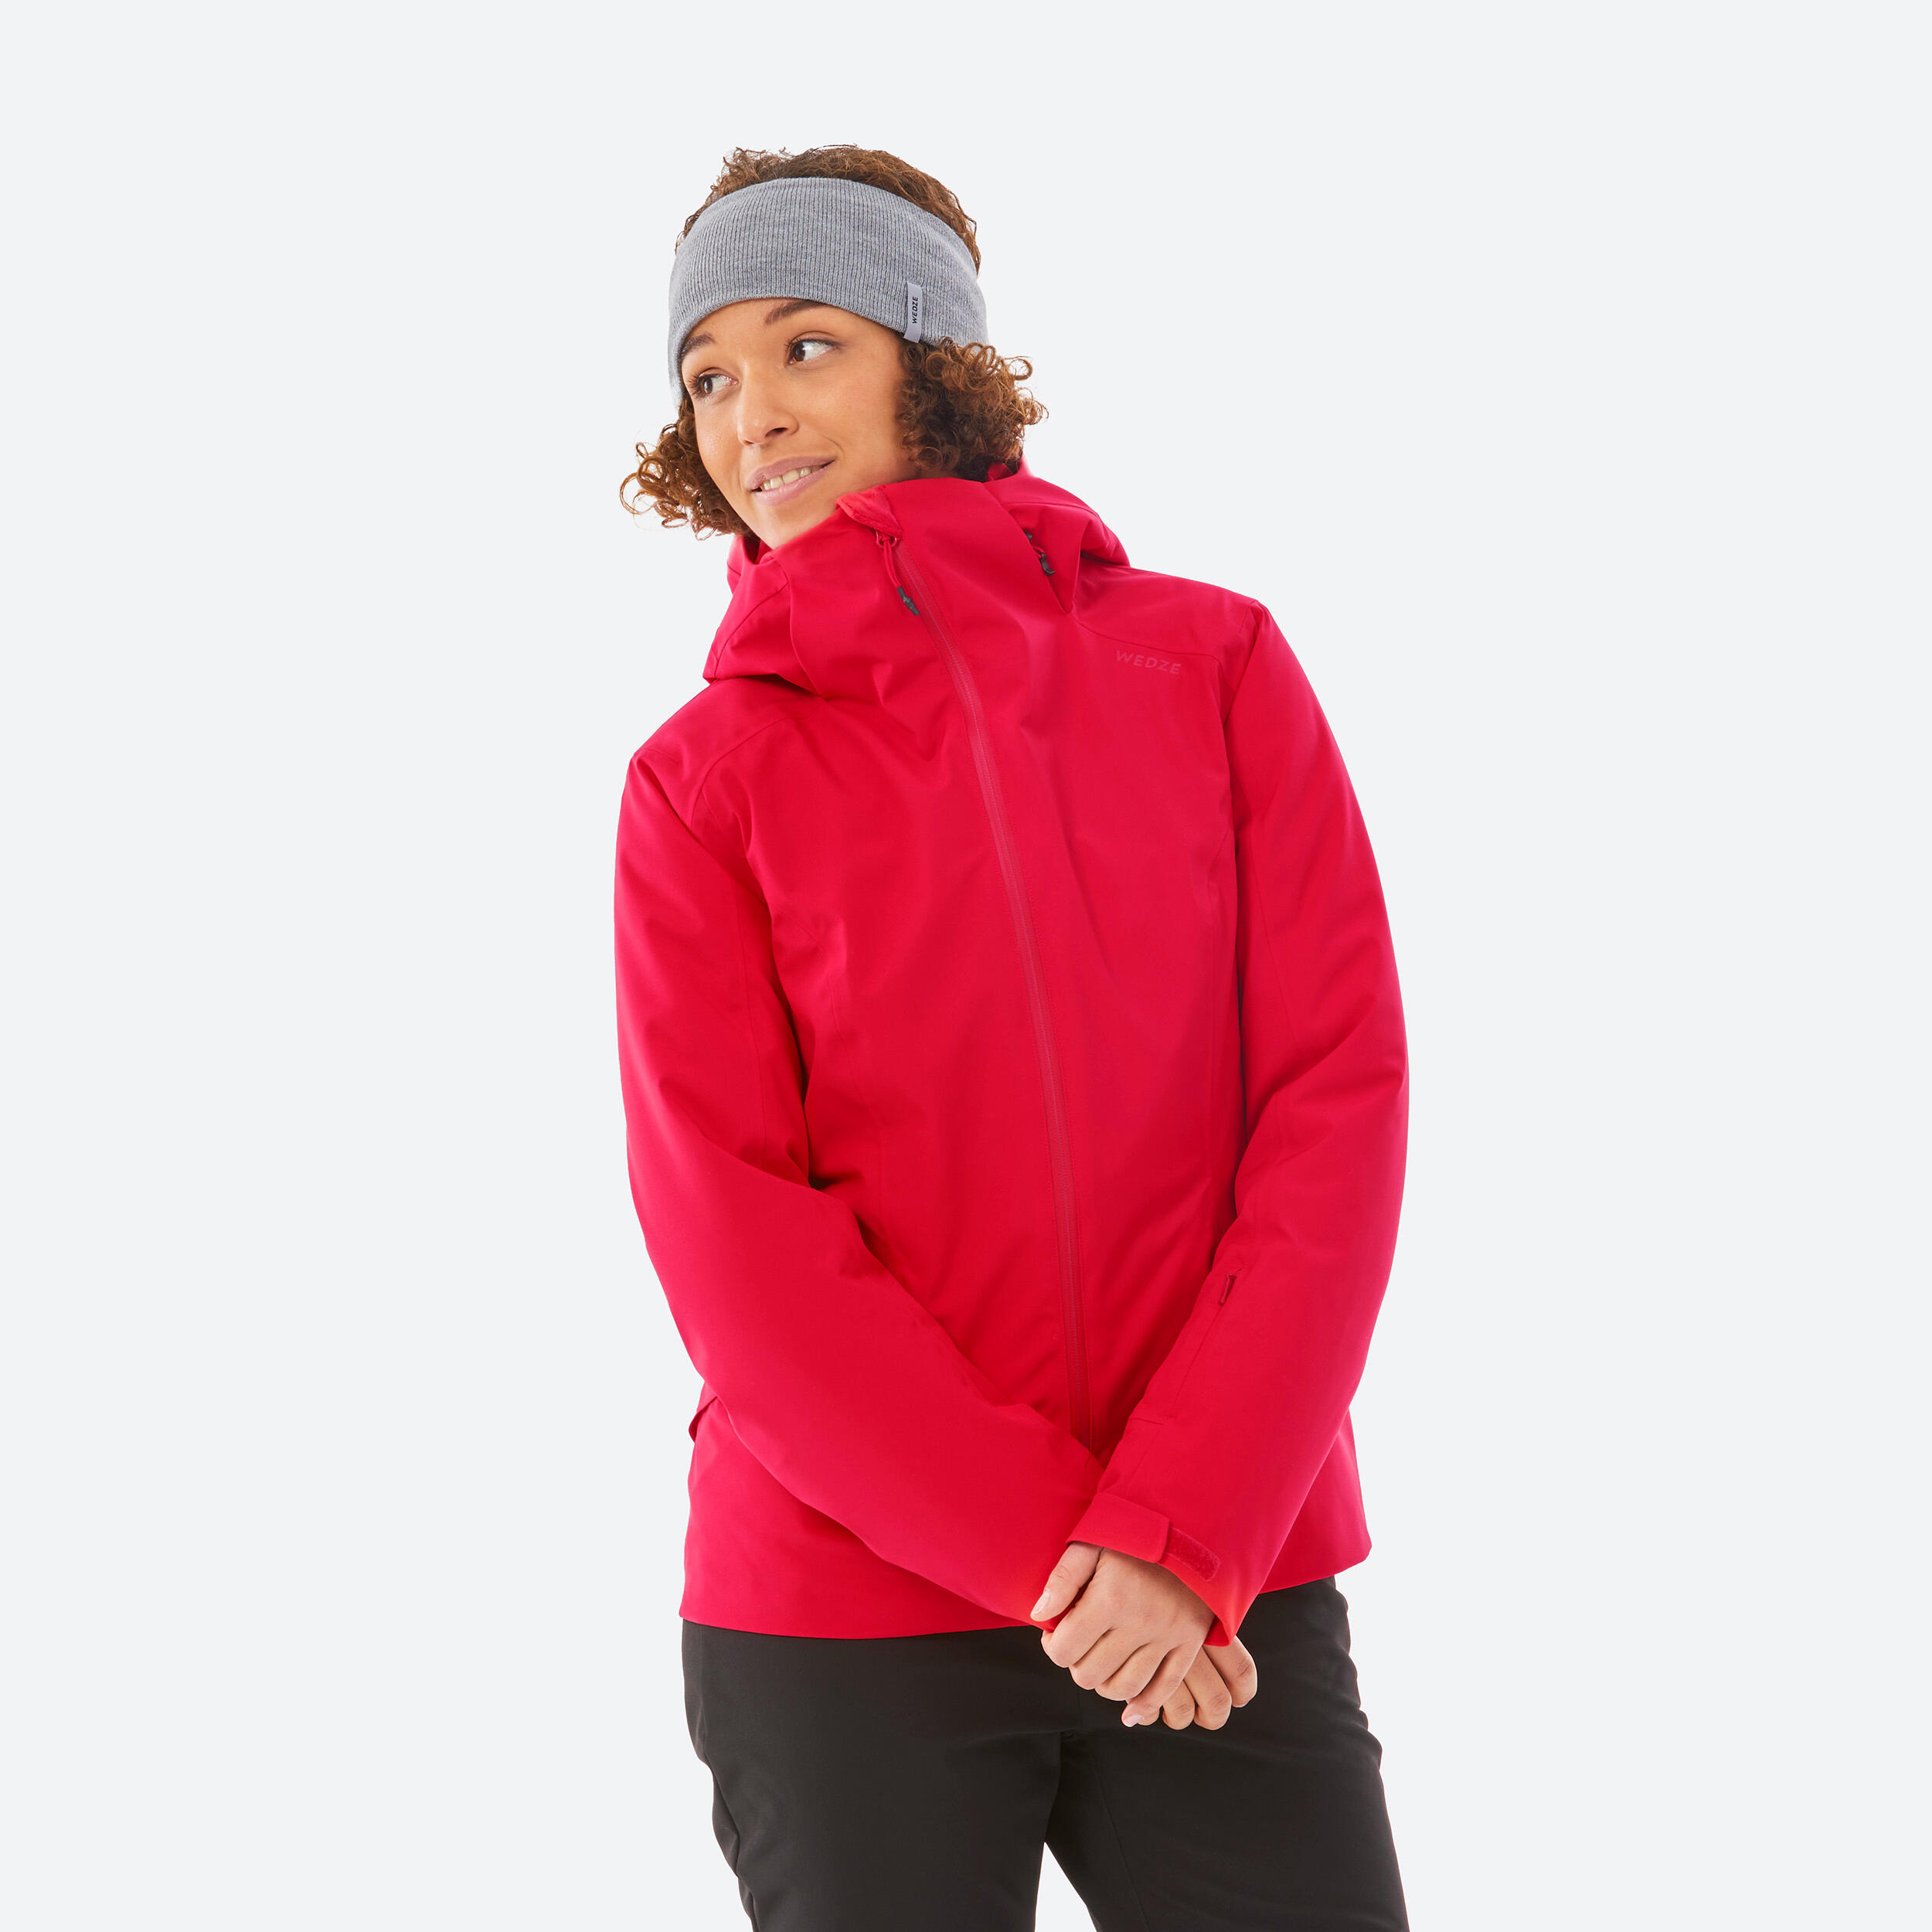 Women's Winter Jacket - Ski 500 Red - Red - Wedze - Decathlon